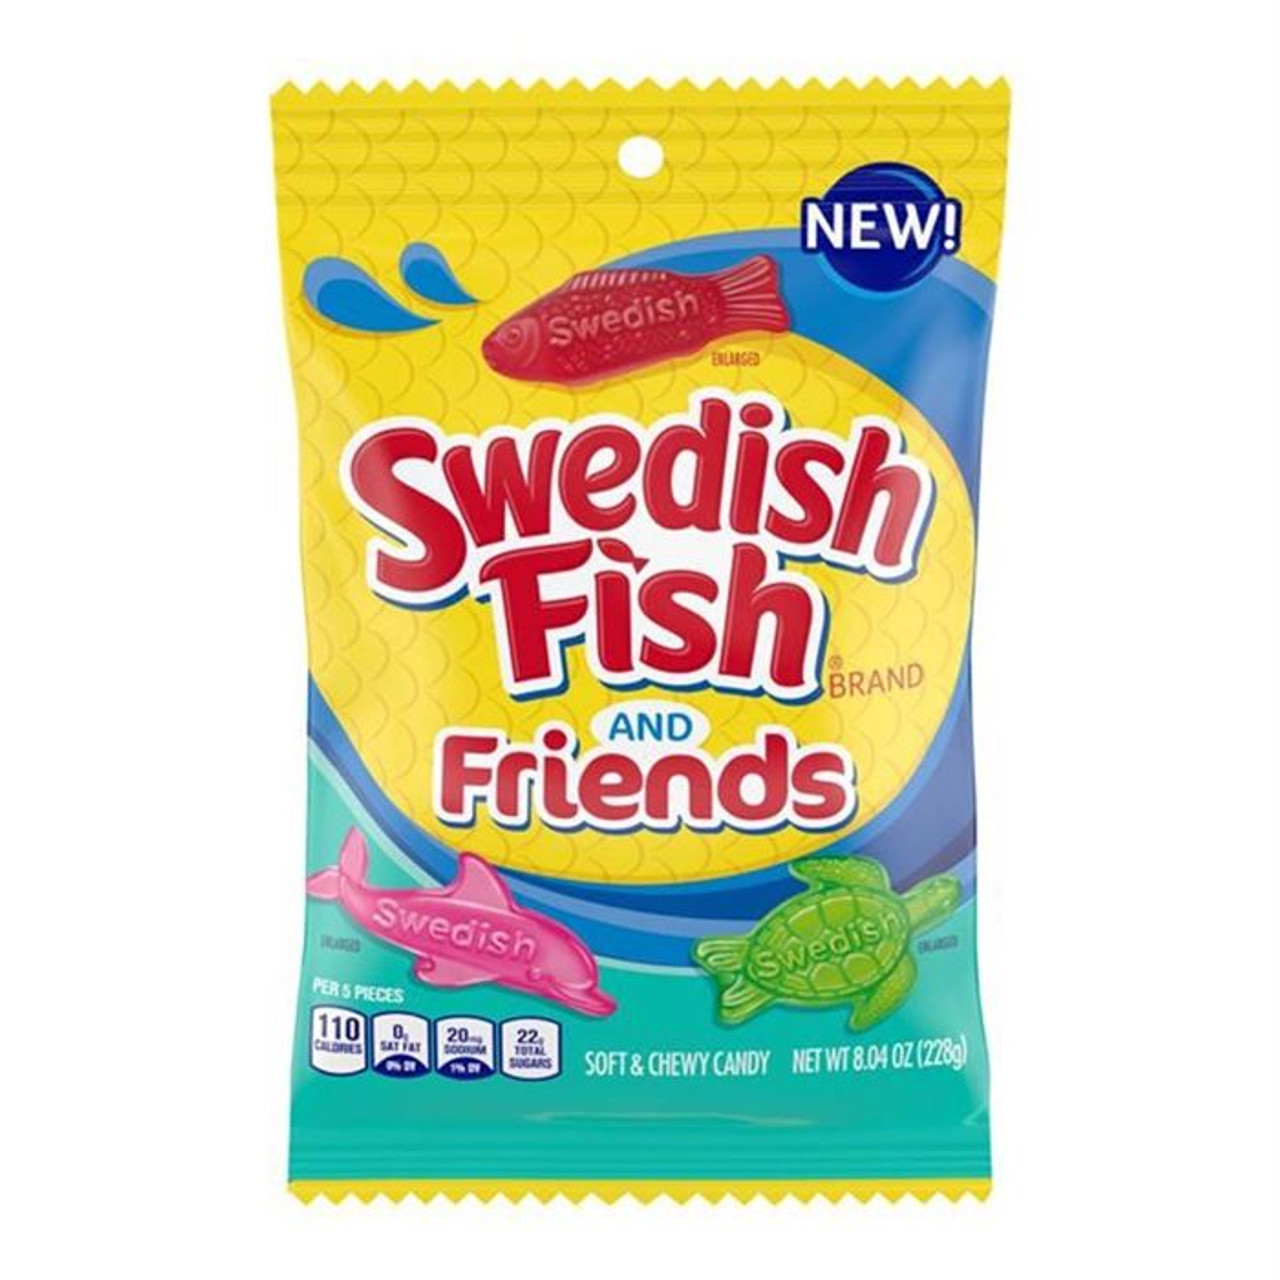 Swedish Fish and Friends - 8.04 oz